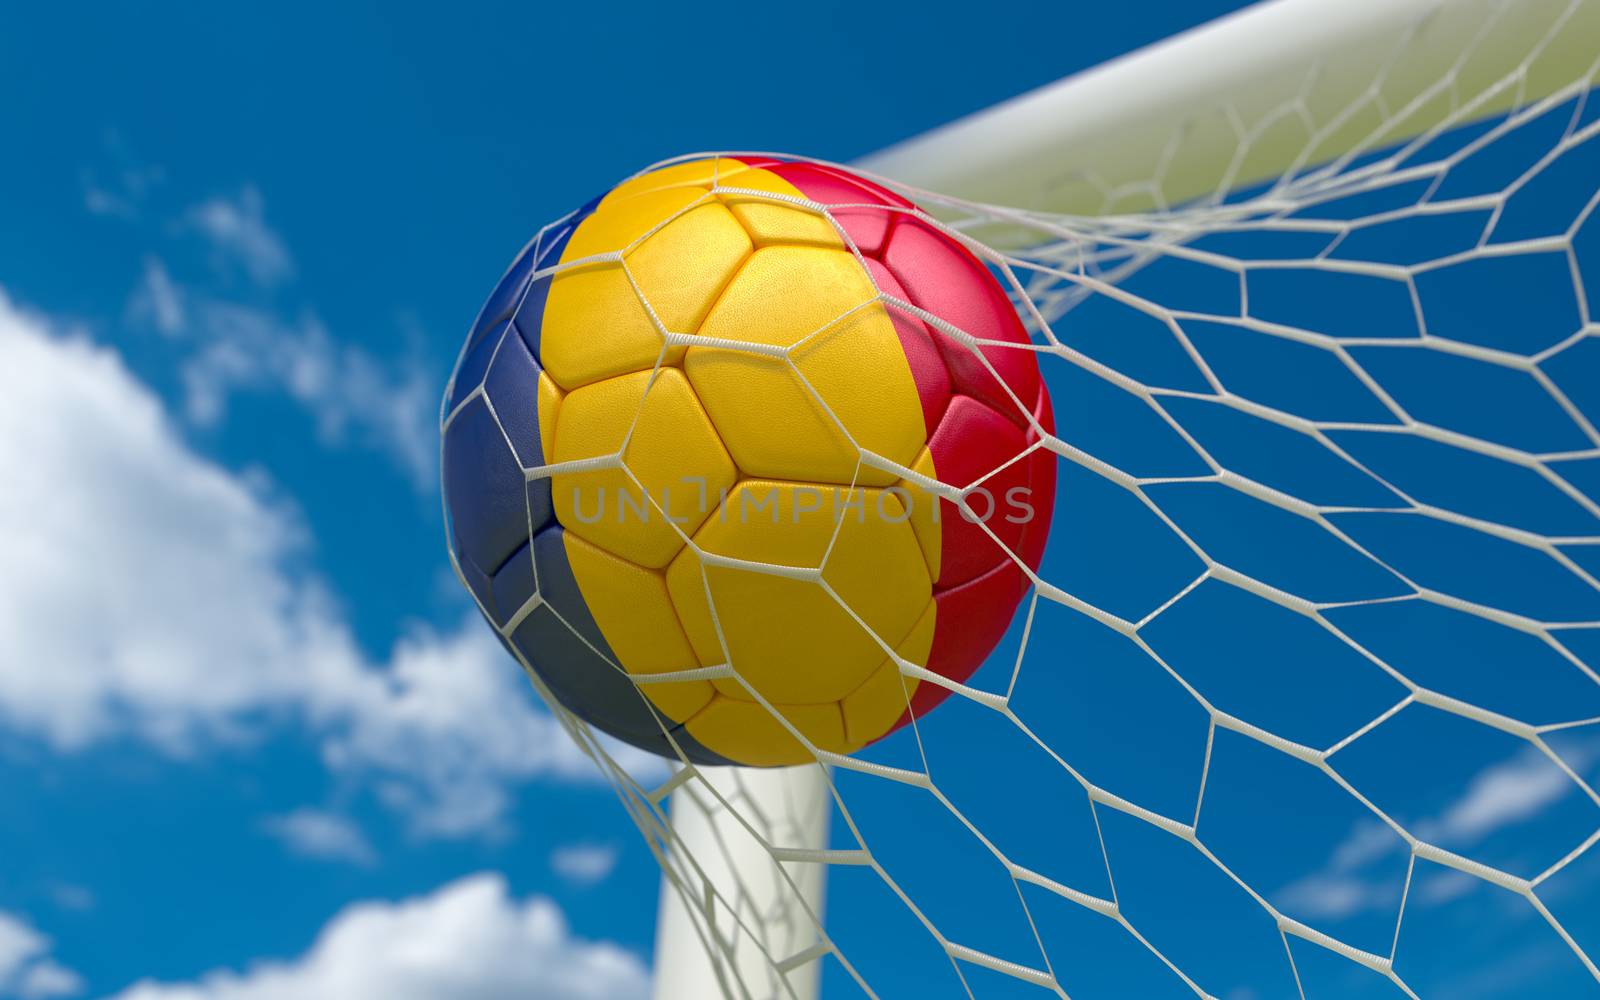 Romania flag and soccer ball in goal net by Barbraford